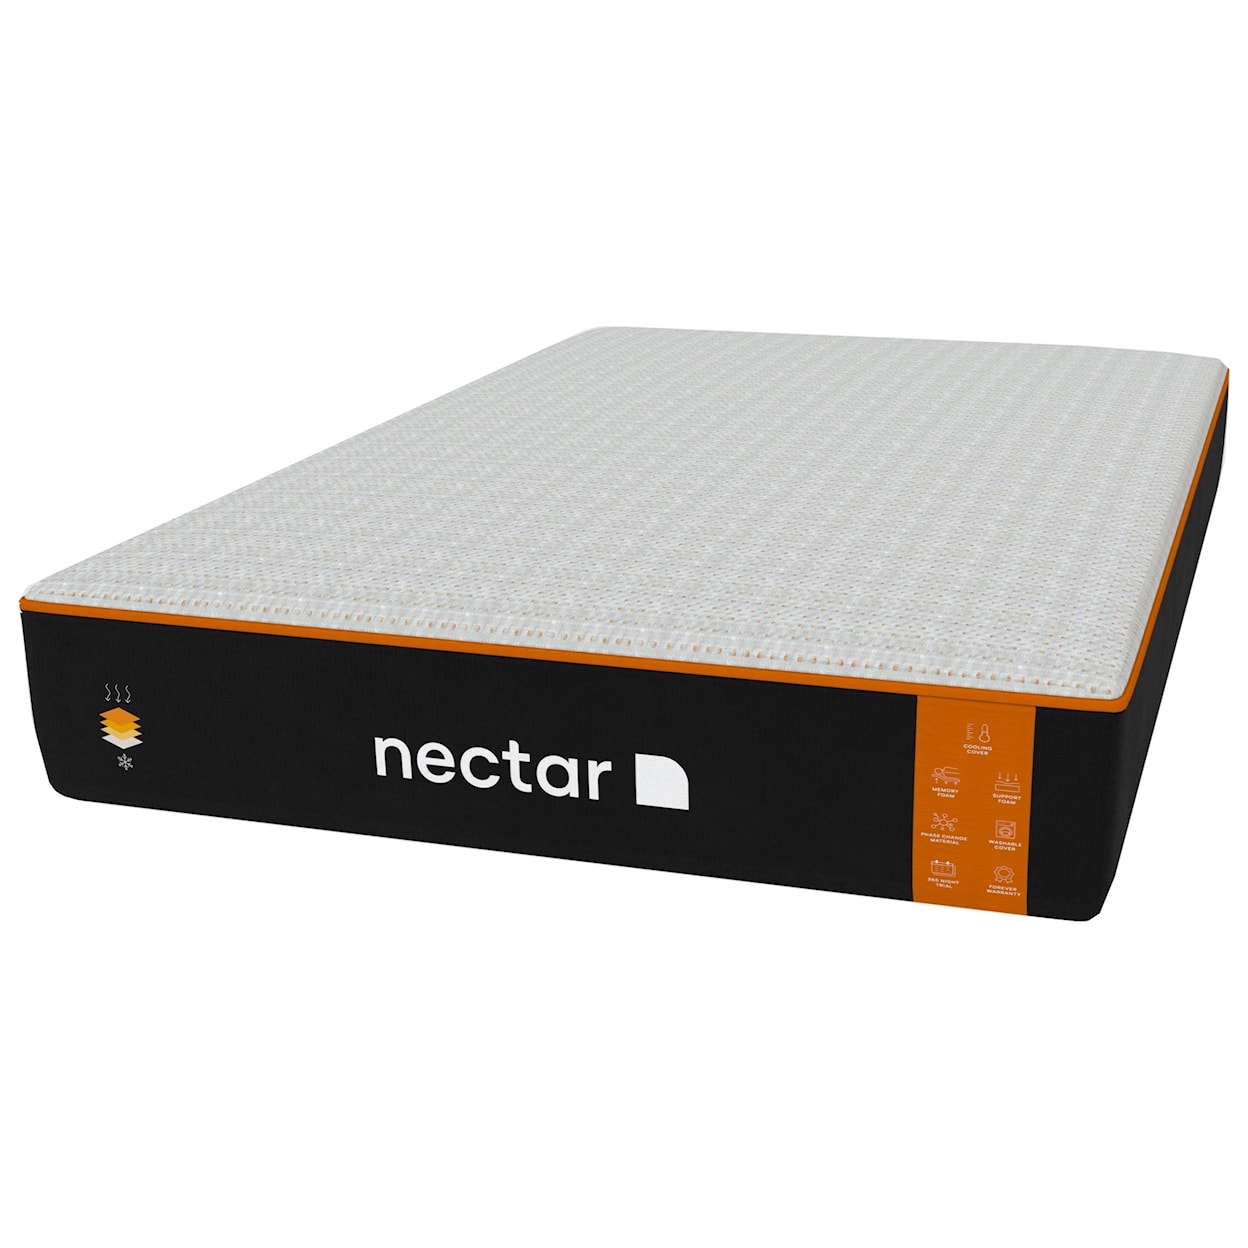 Nectar Nectar Premier Copper King 14" Gel Memory Foam Mattress